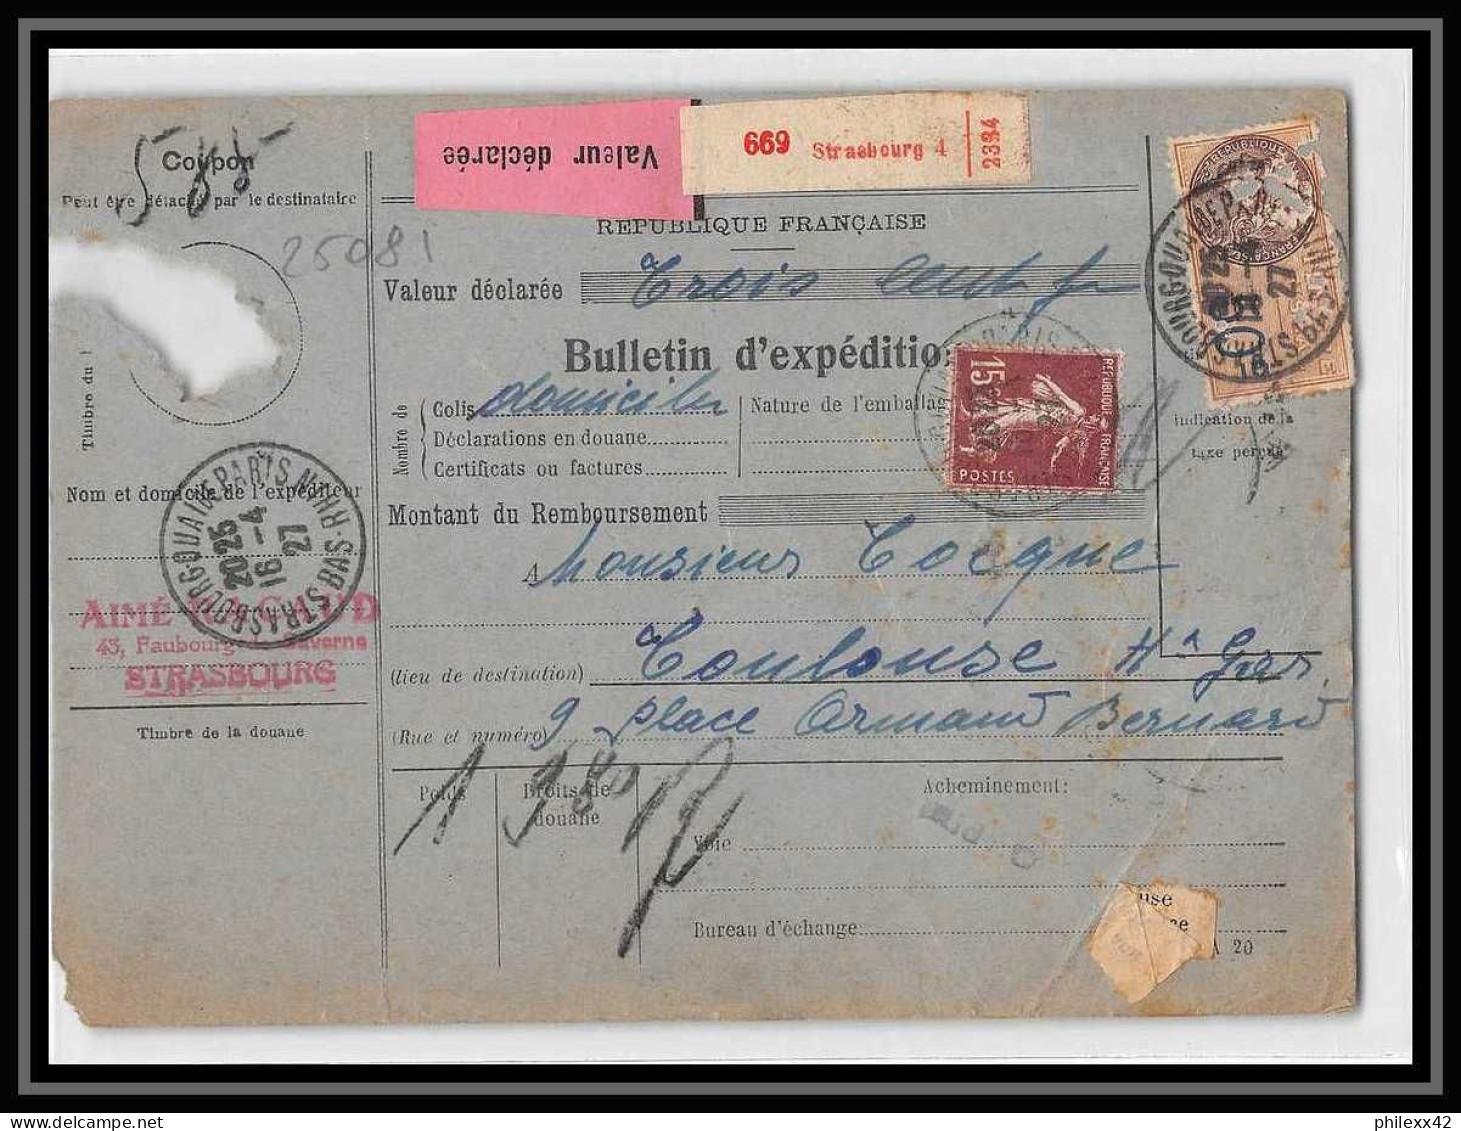 25081 PROMO Bulletin D'expédition France Colis Postaux Fiscal Haut Rhin 1927 Strasbourg Merson 145+206 - Covers & Documents